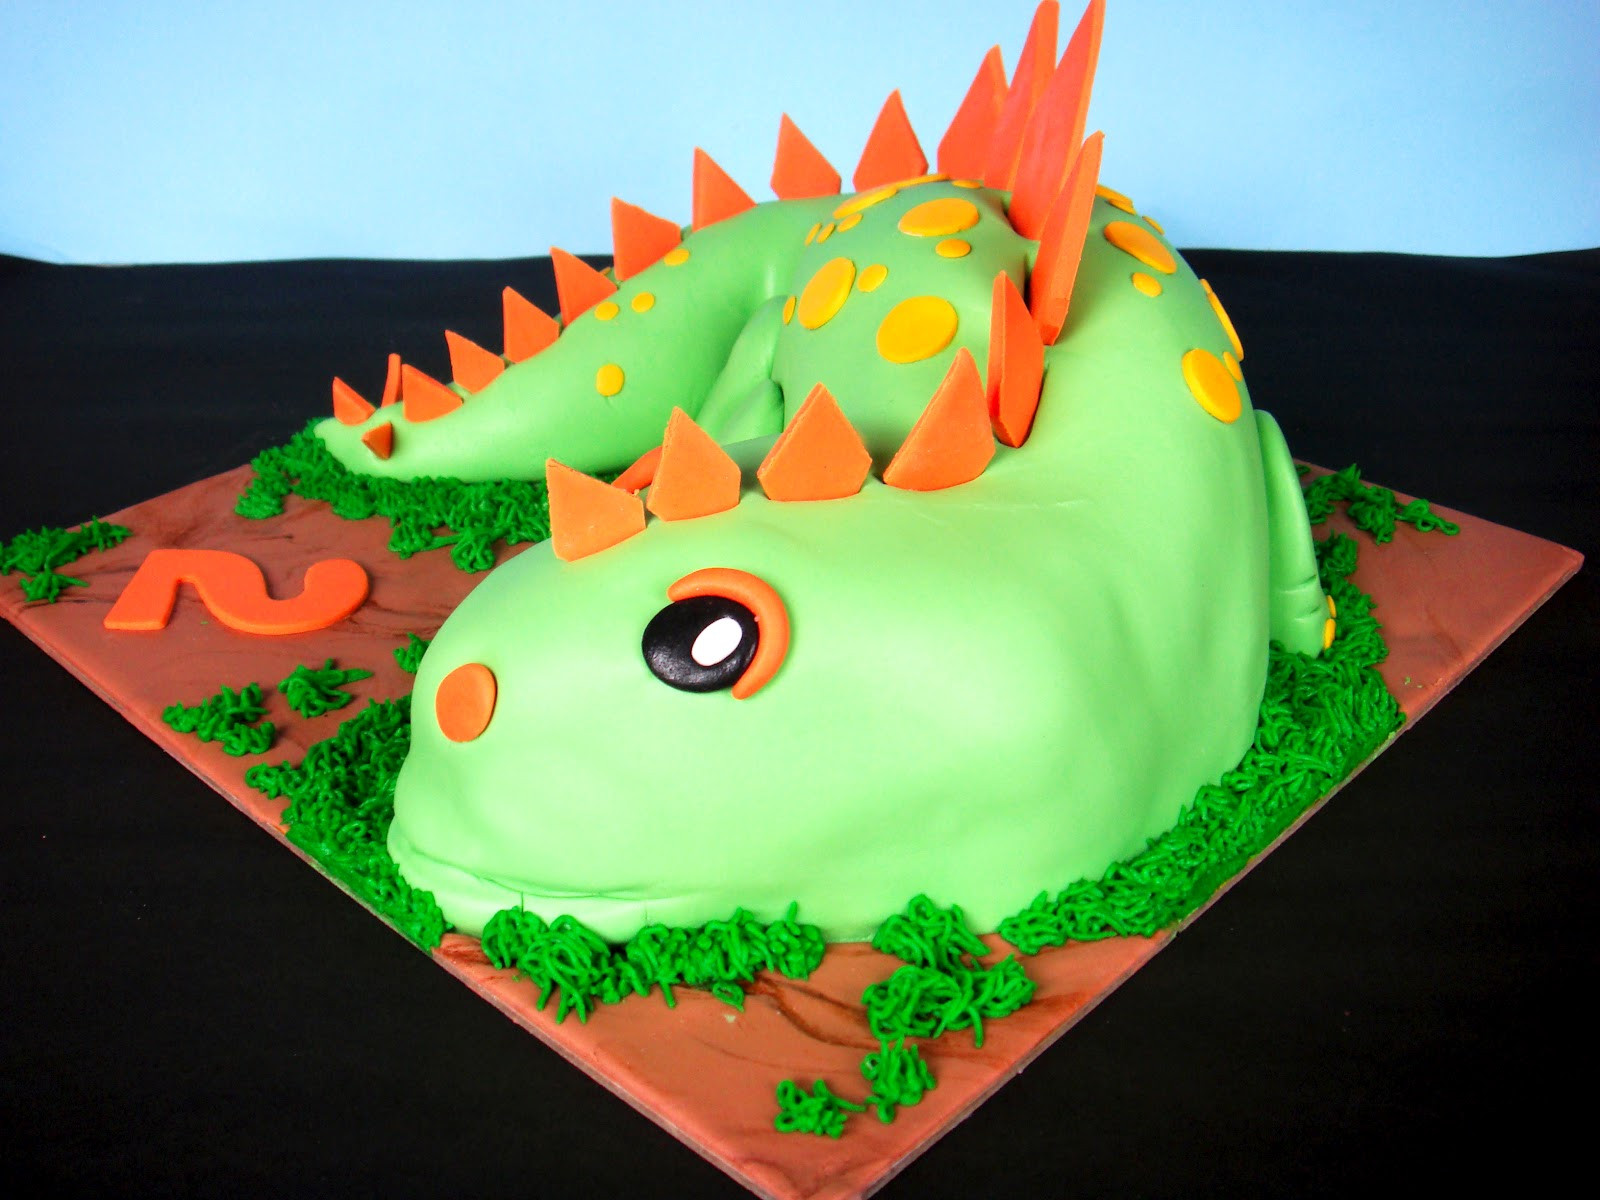 Best ideas about Dinosaur Birthday Cake
. Save or Pin butter hearts sugar Dinosaur Birthday Cake Now.